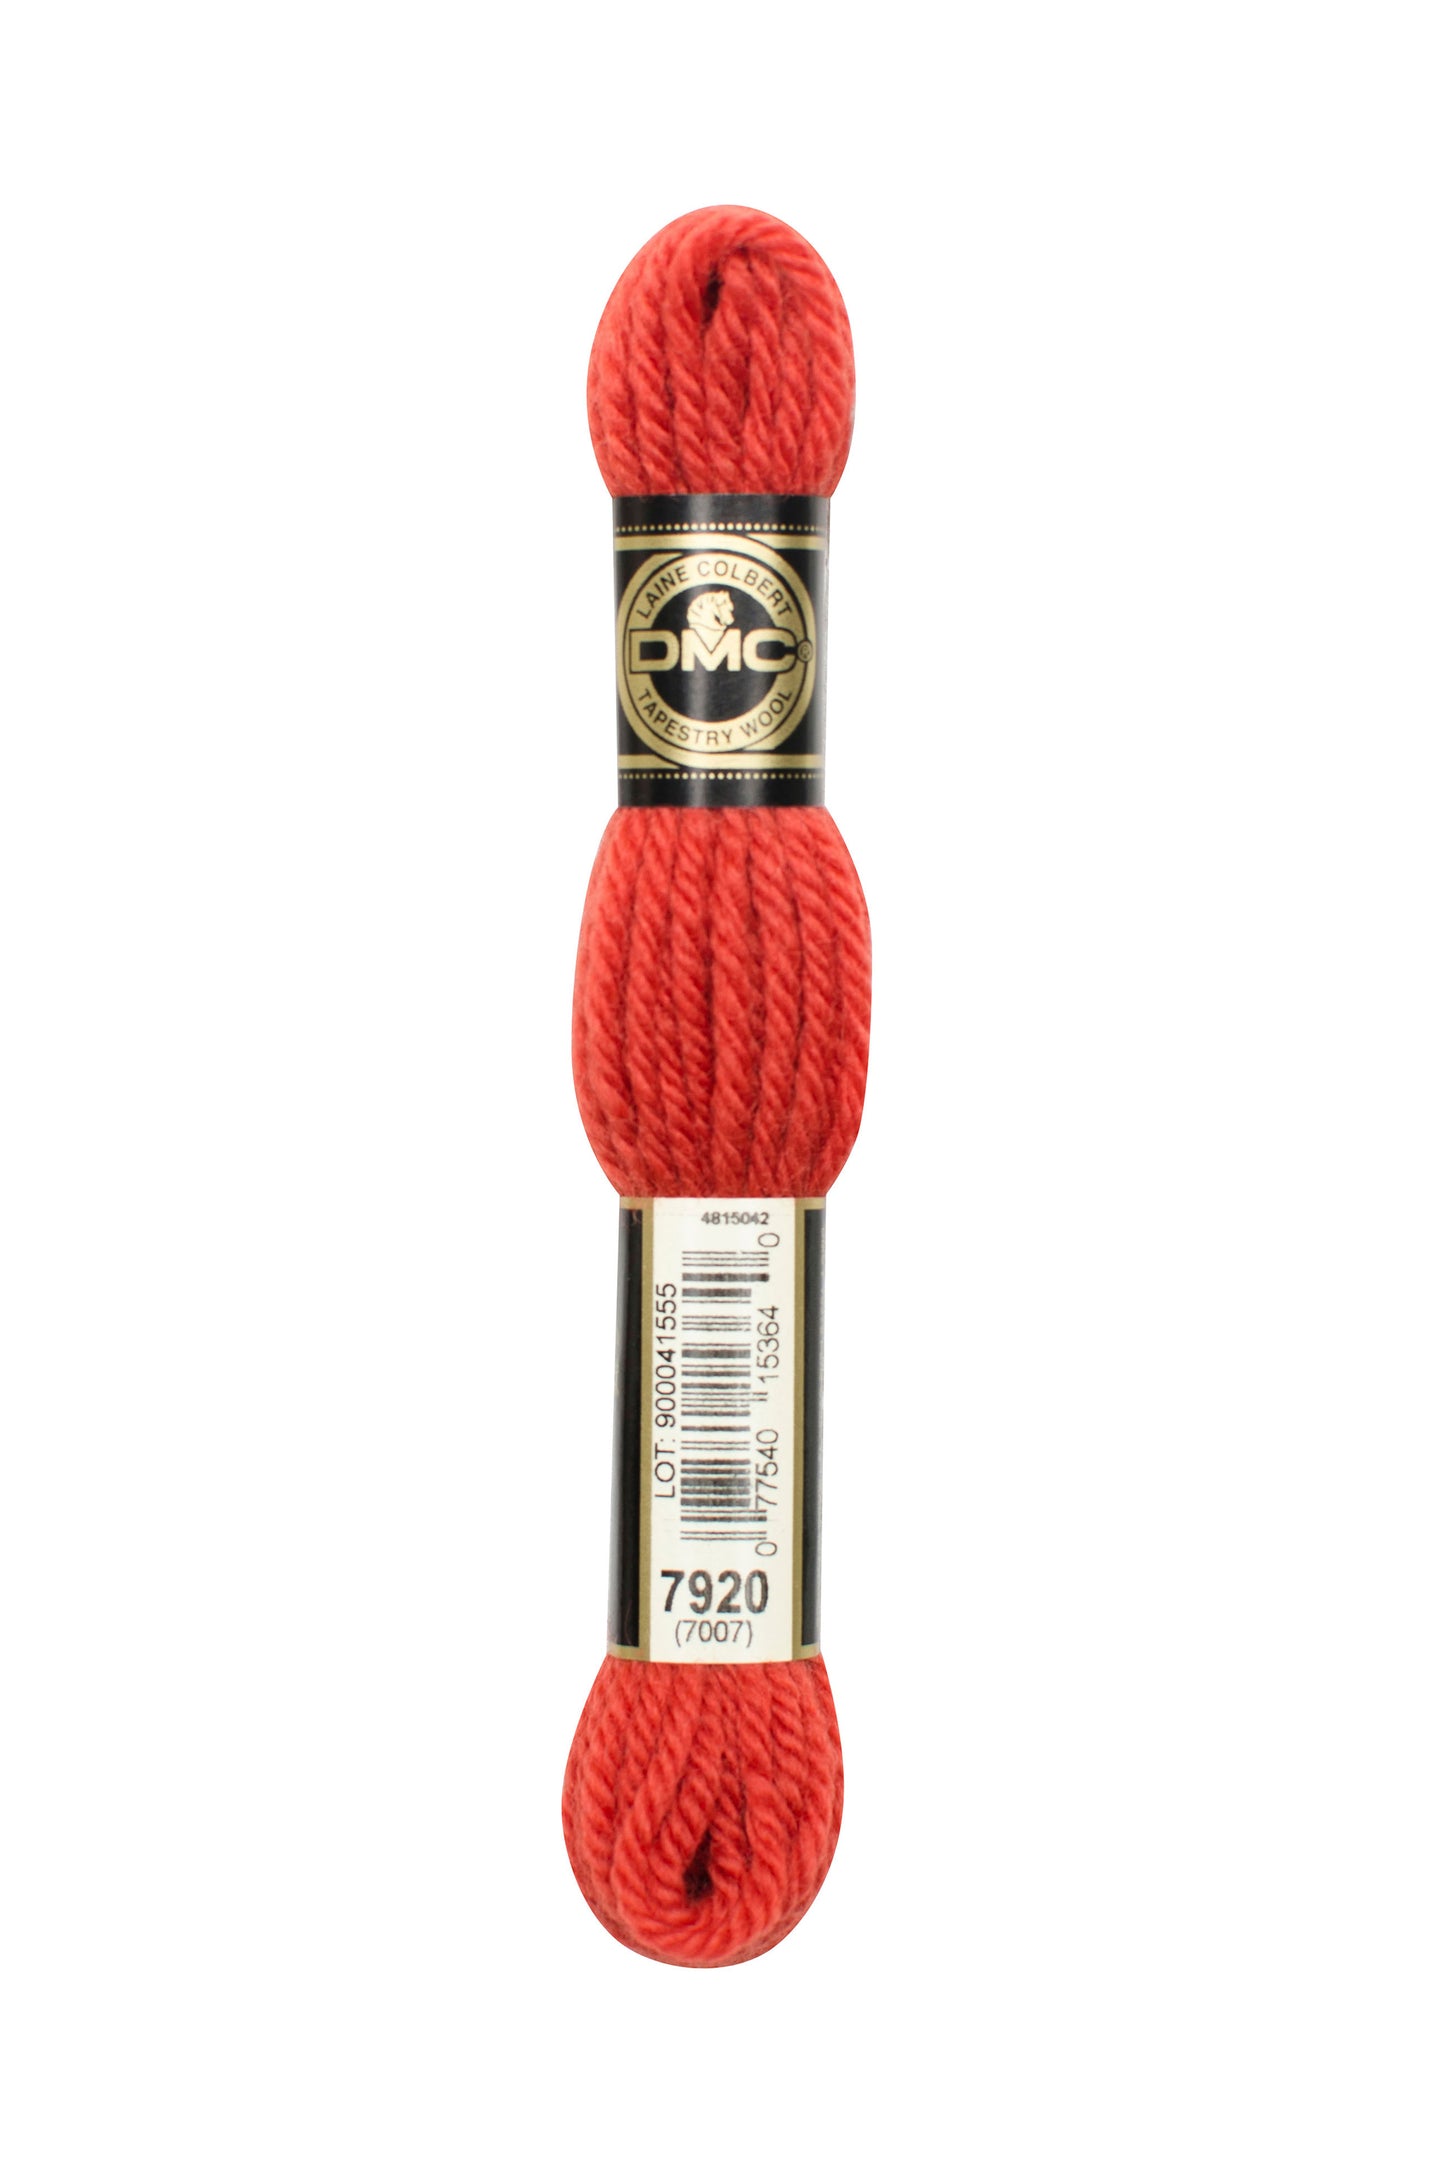 7920 – DMC Tapestry Wool